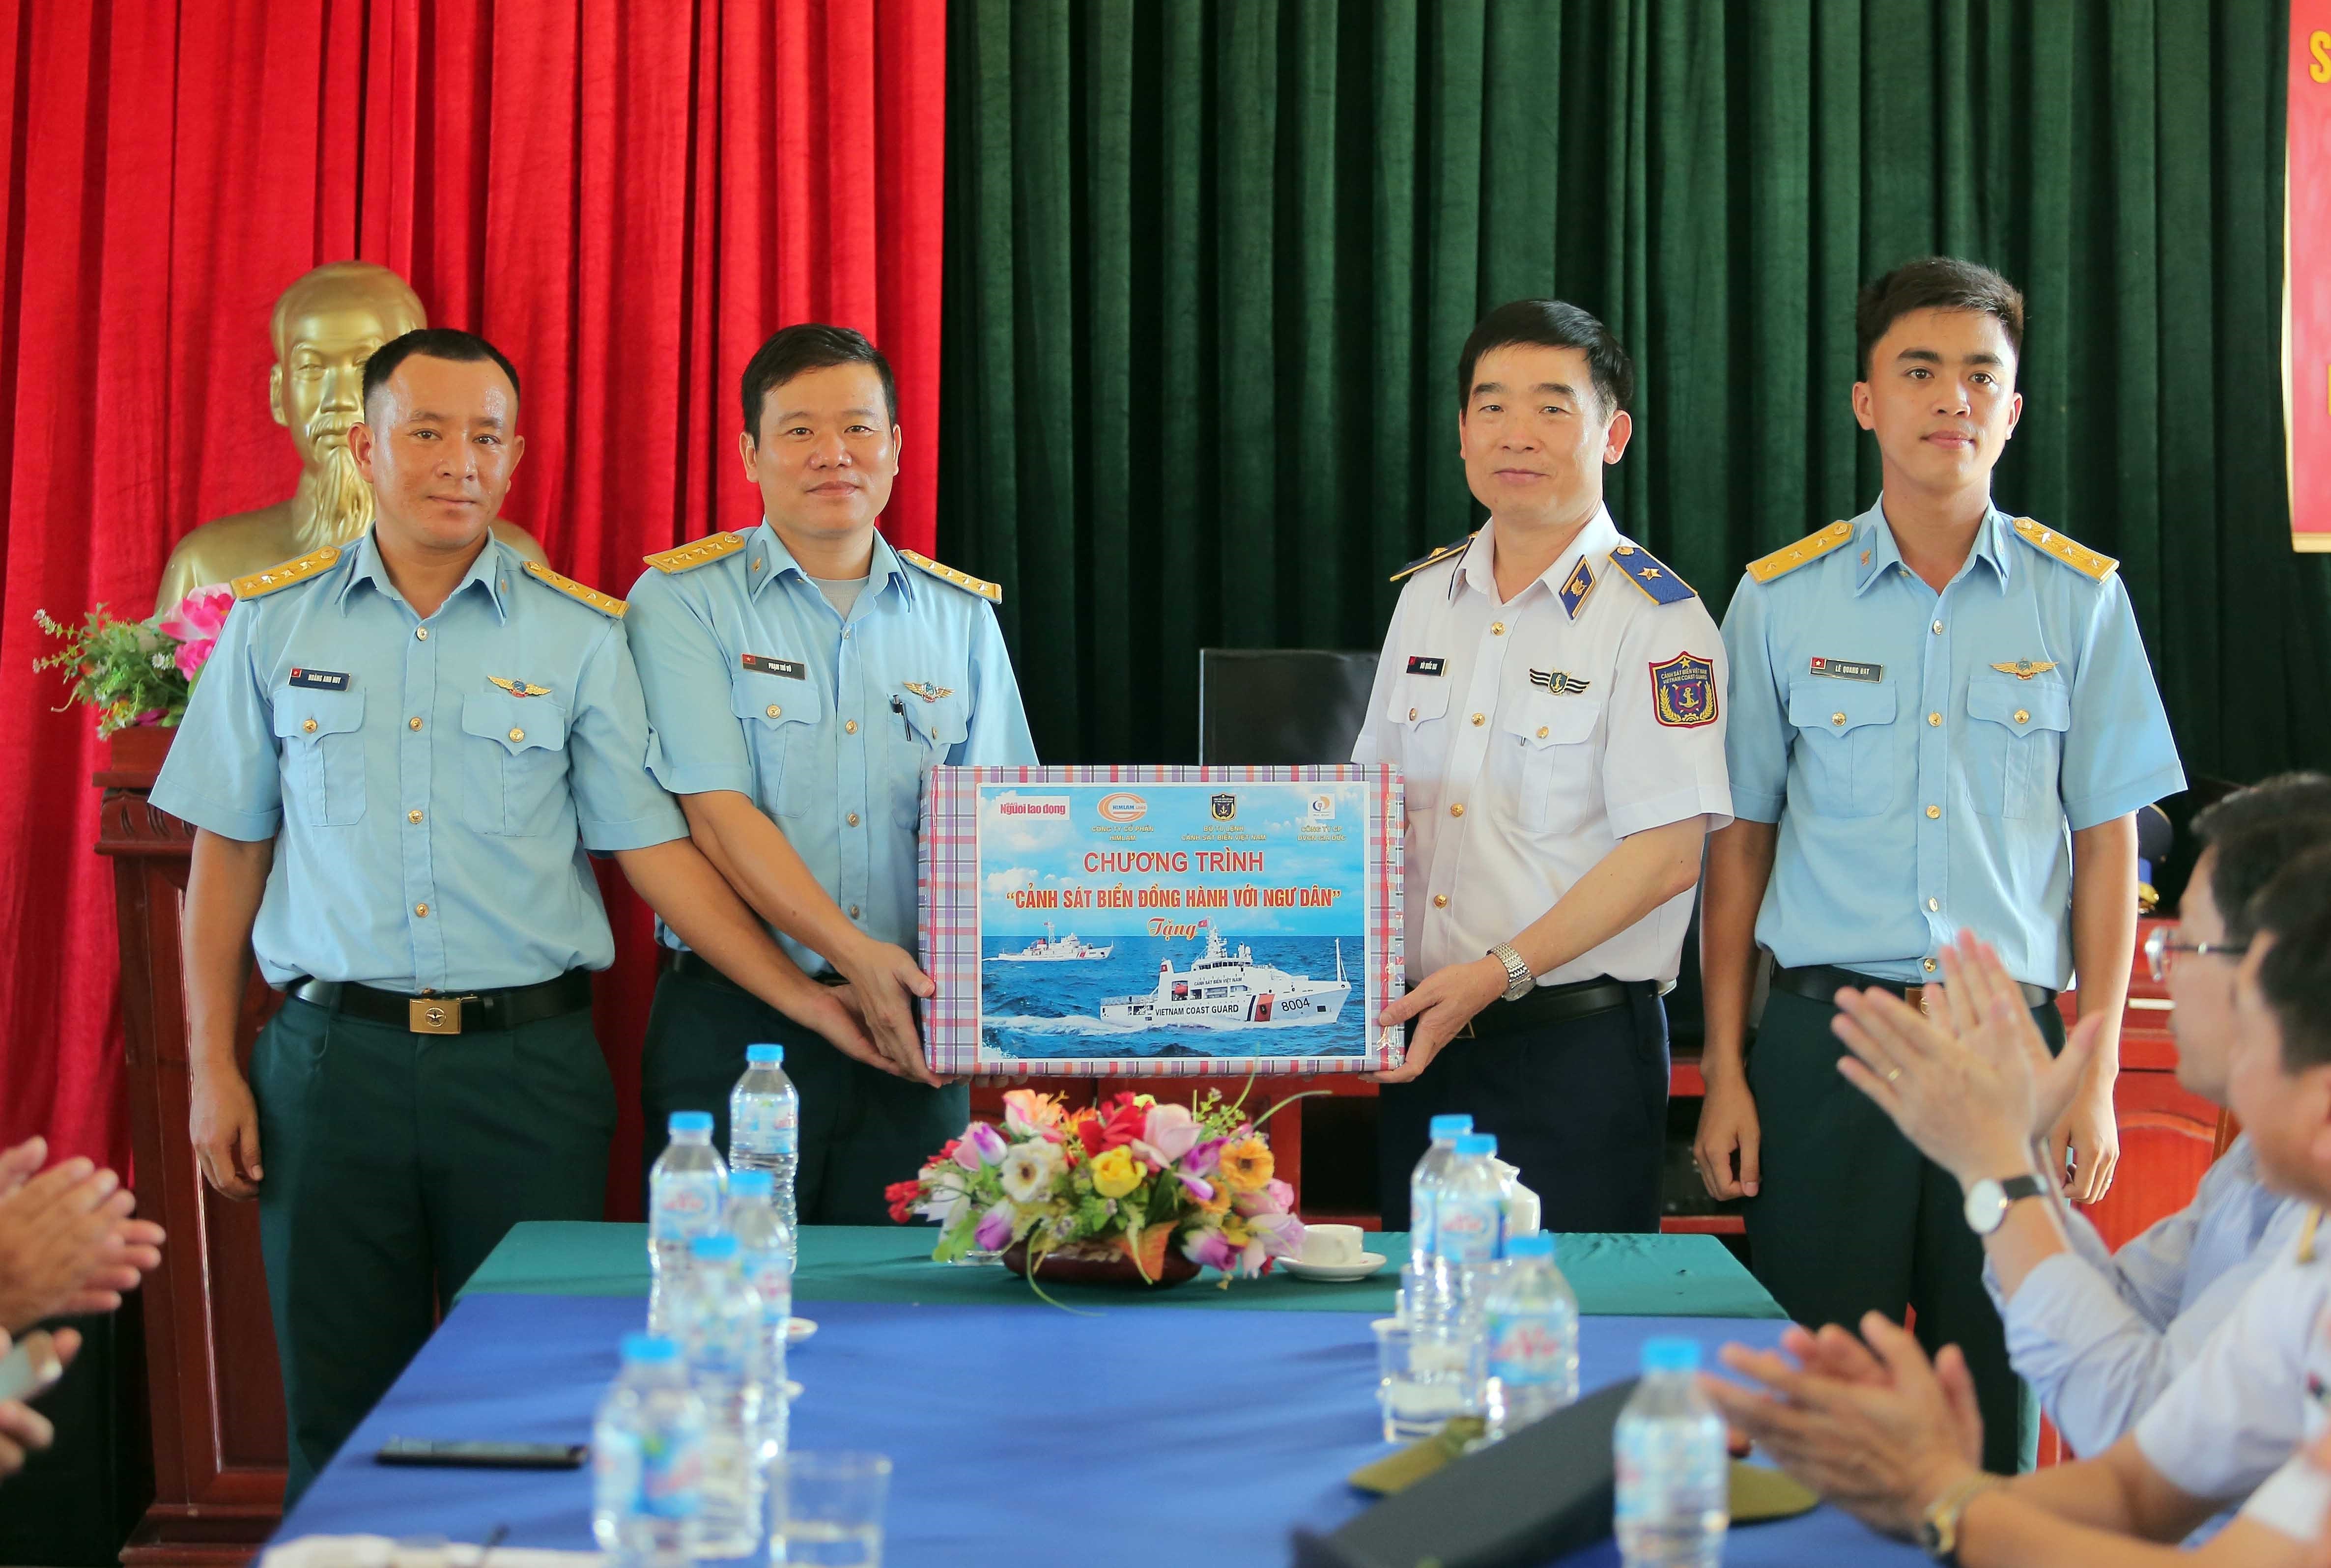 Extienden programa “Policia maritima acompana a pescadores” en la isla vietnamita de Bach Long Vi hinh anh 3